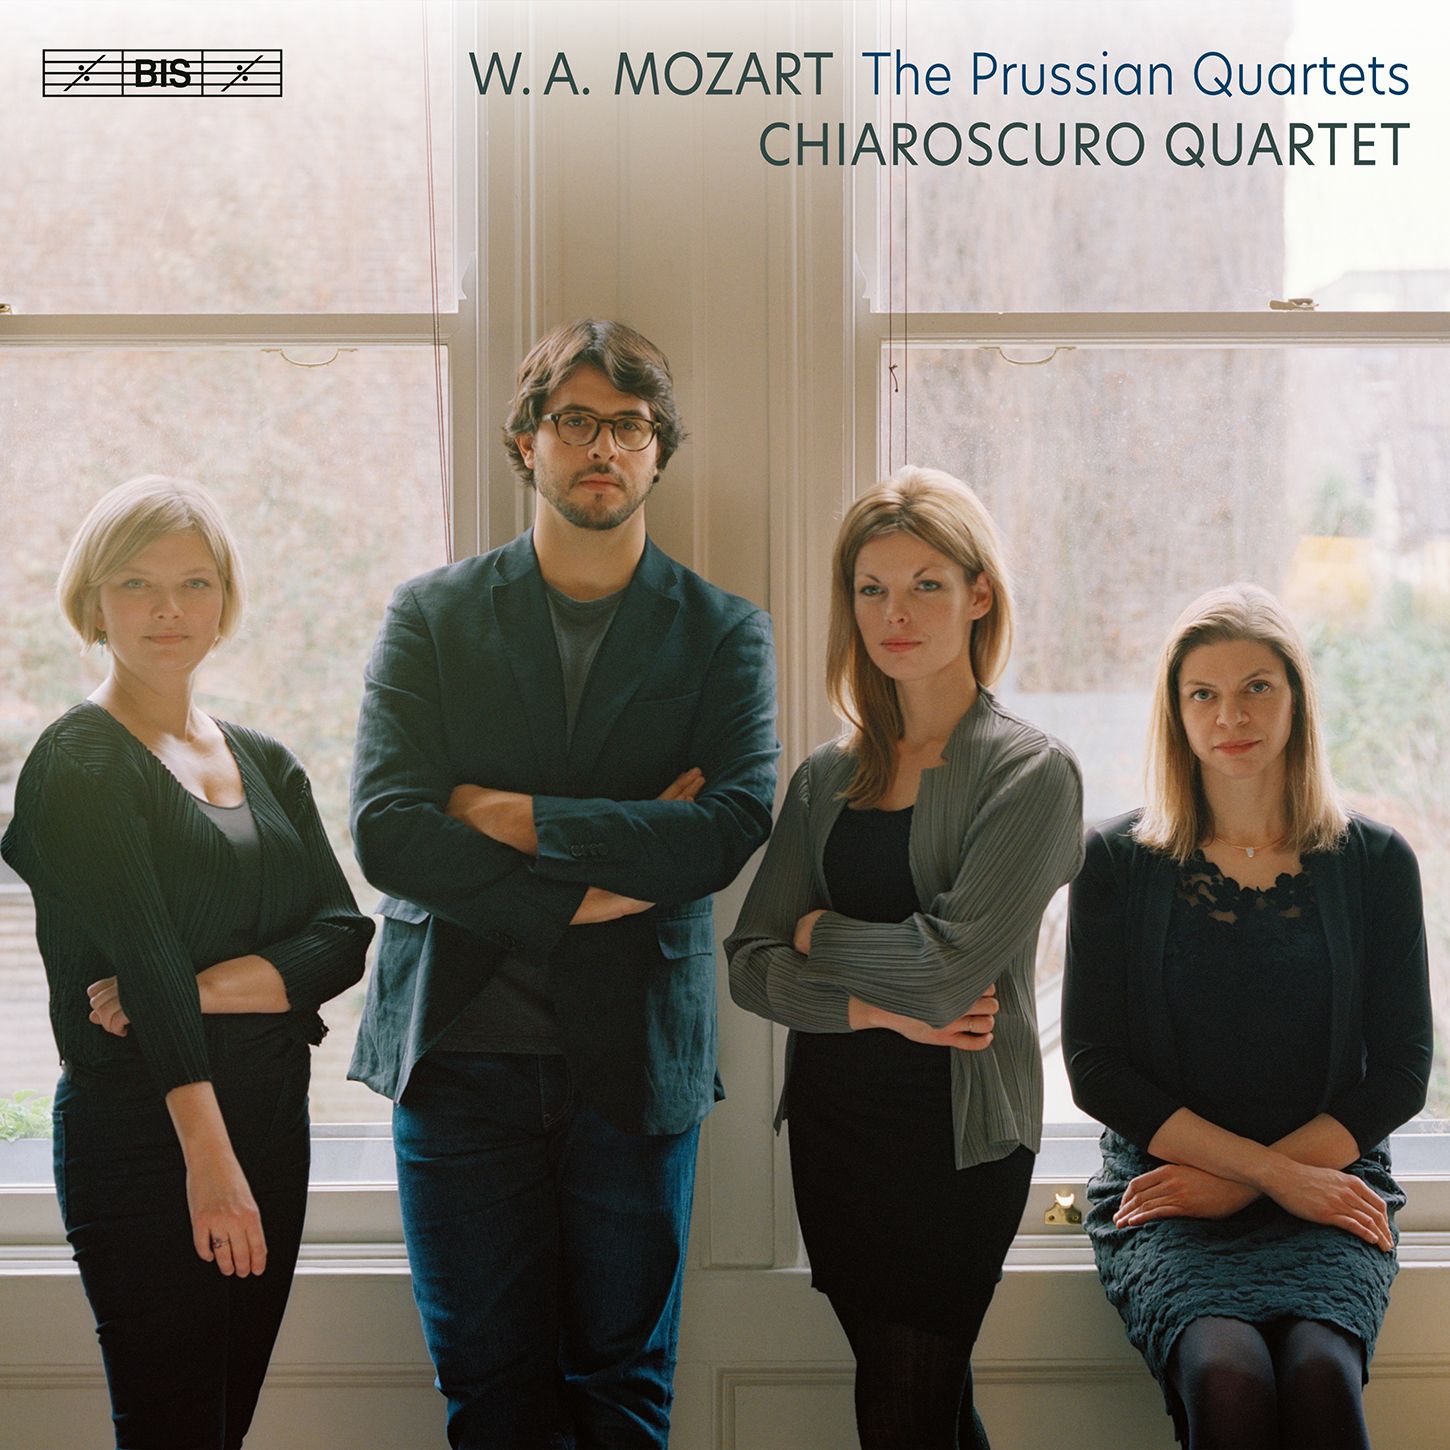 The Chiaroscuro Quartet triumphs in Mozart's Prussian Quartets